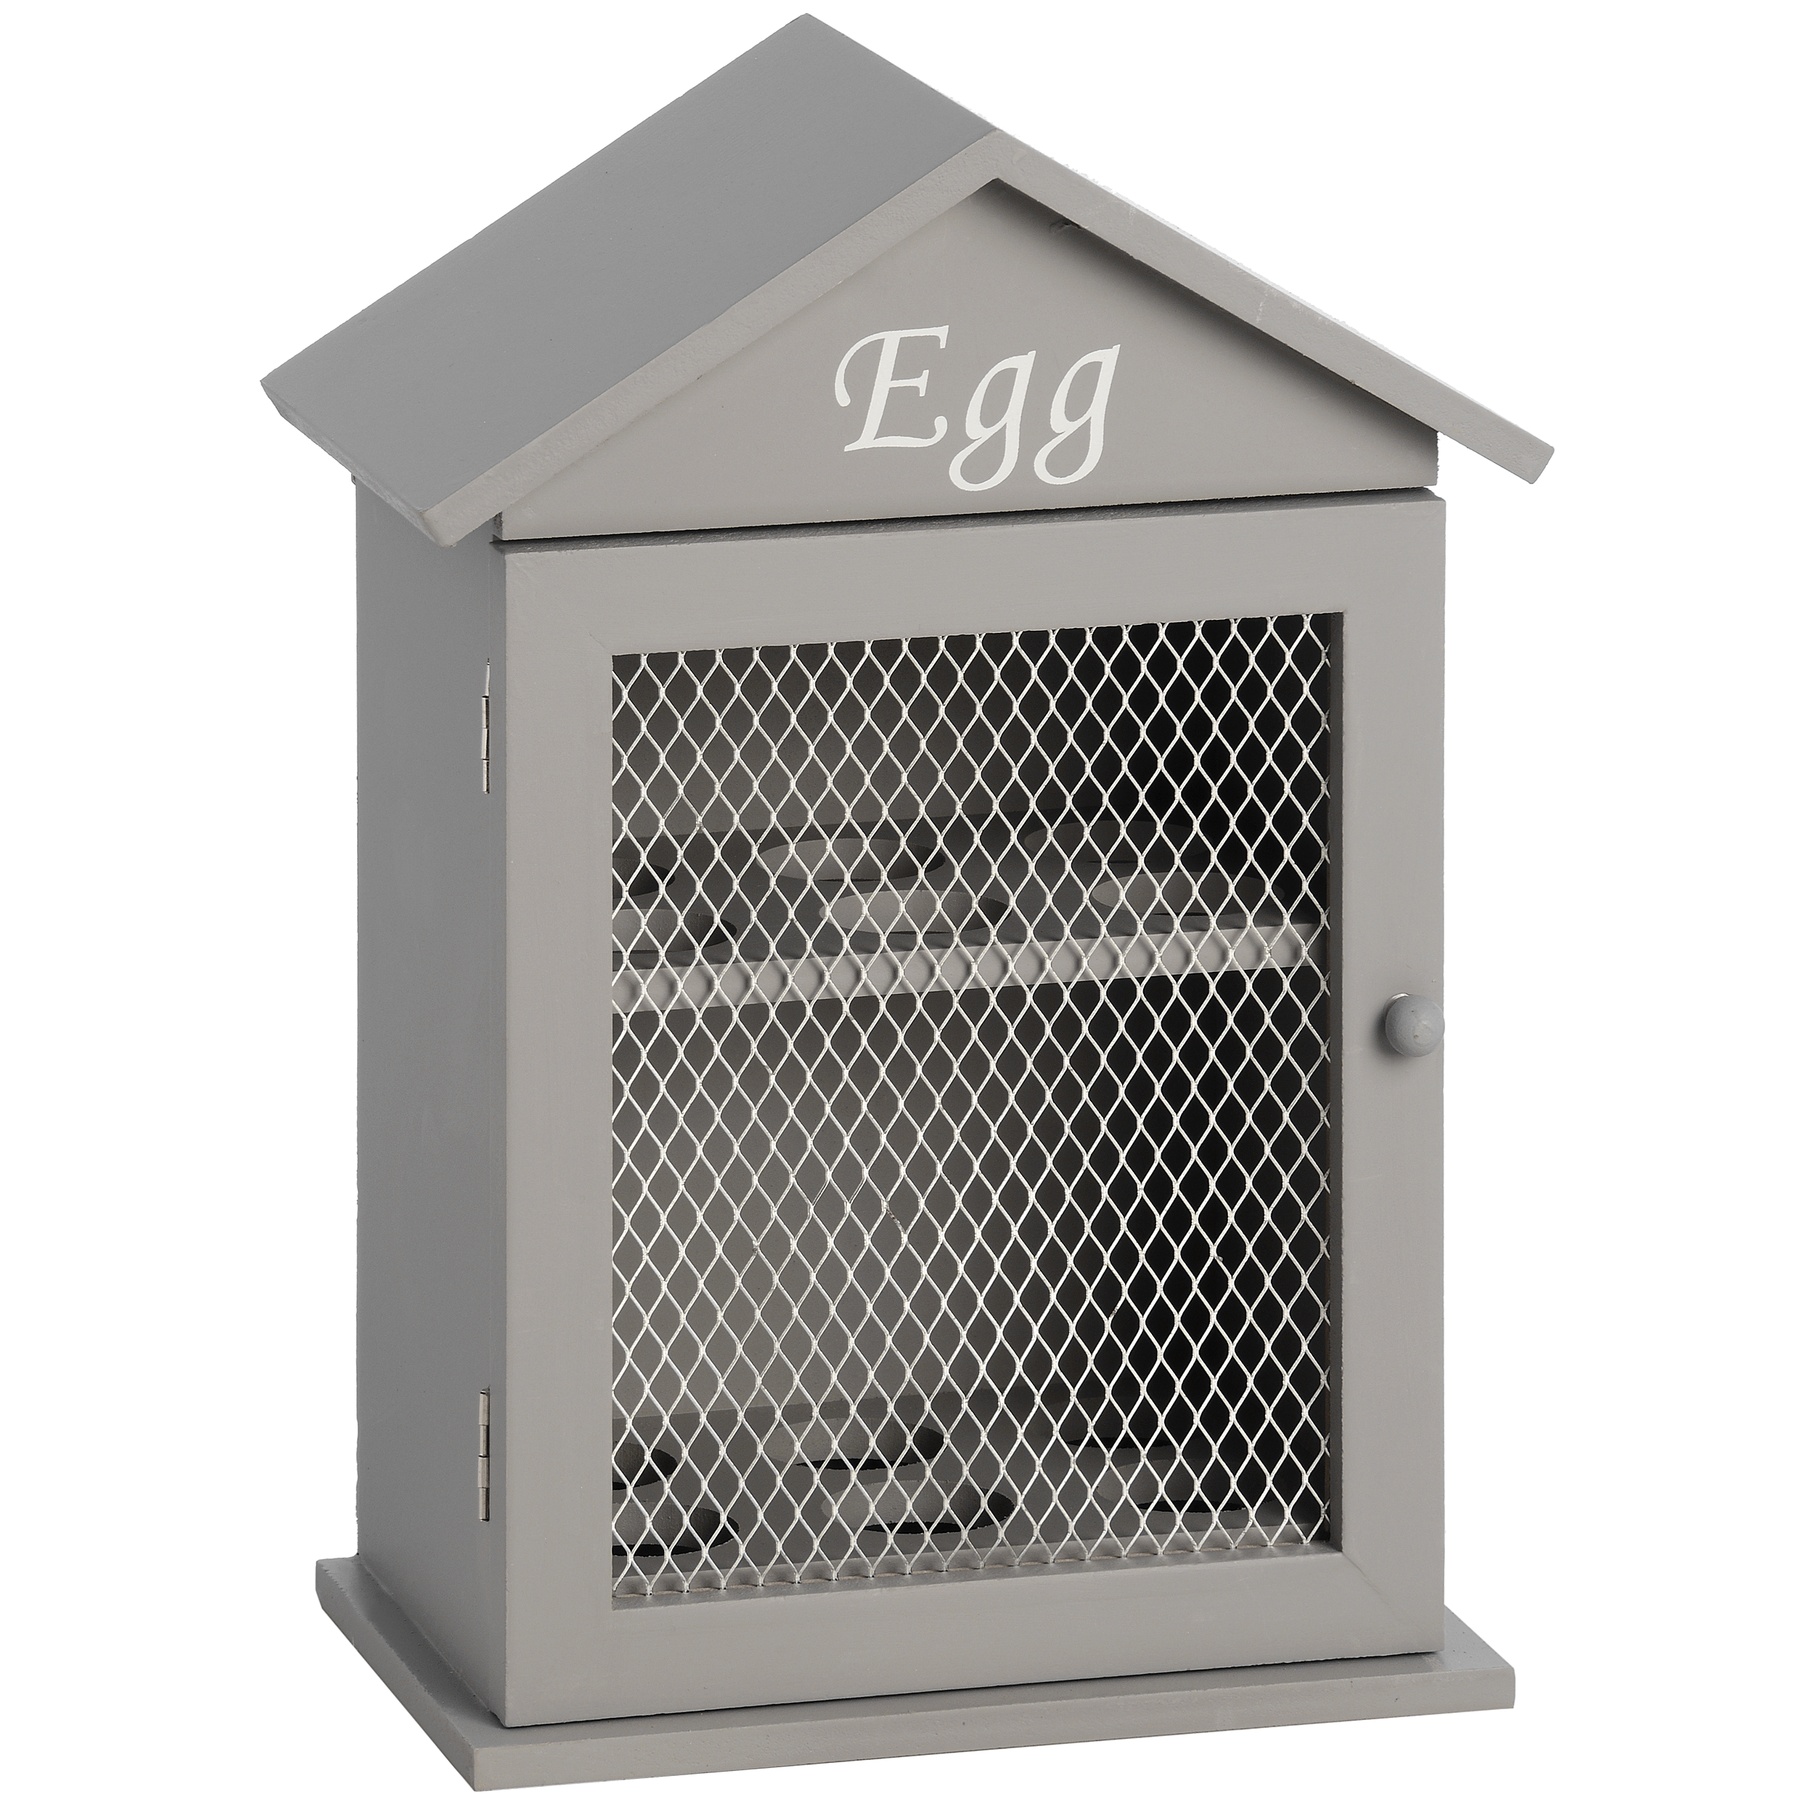 Grey Eggs Cabinet - Image 1